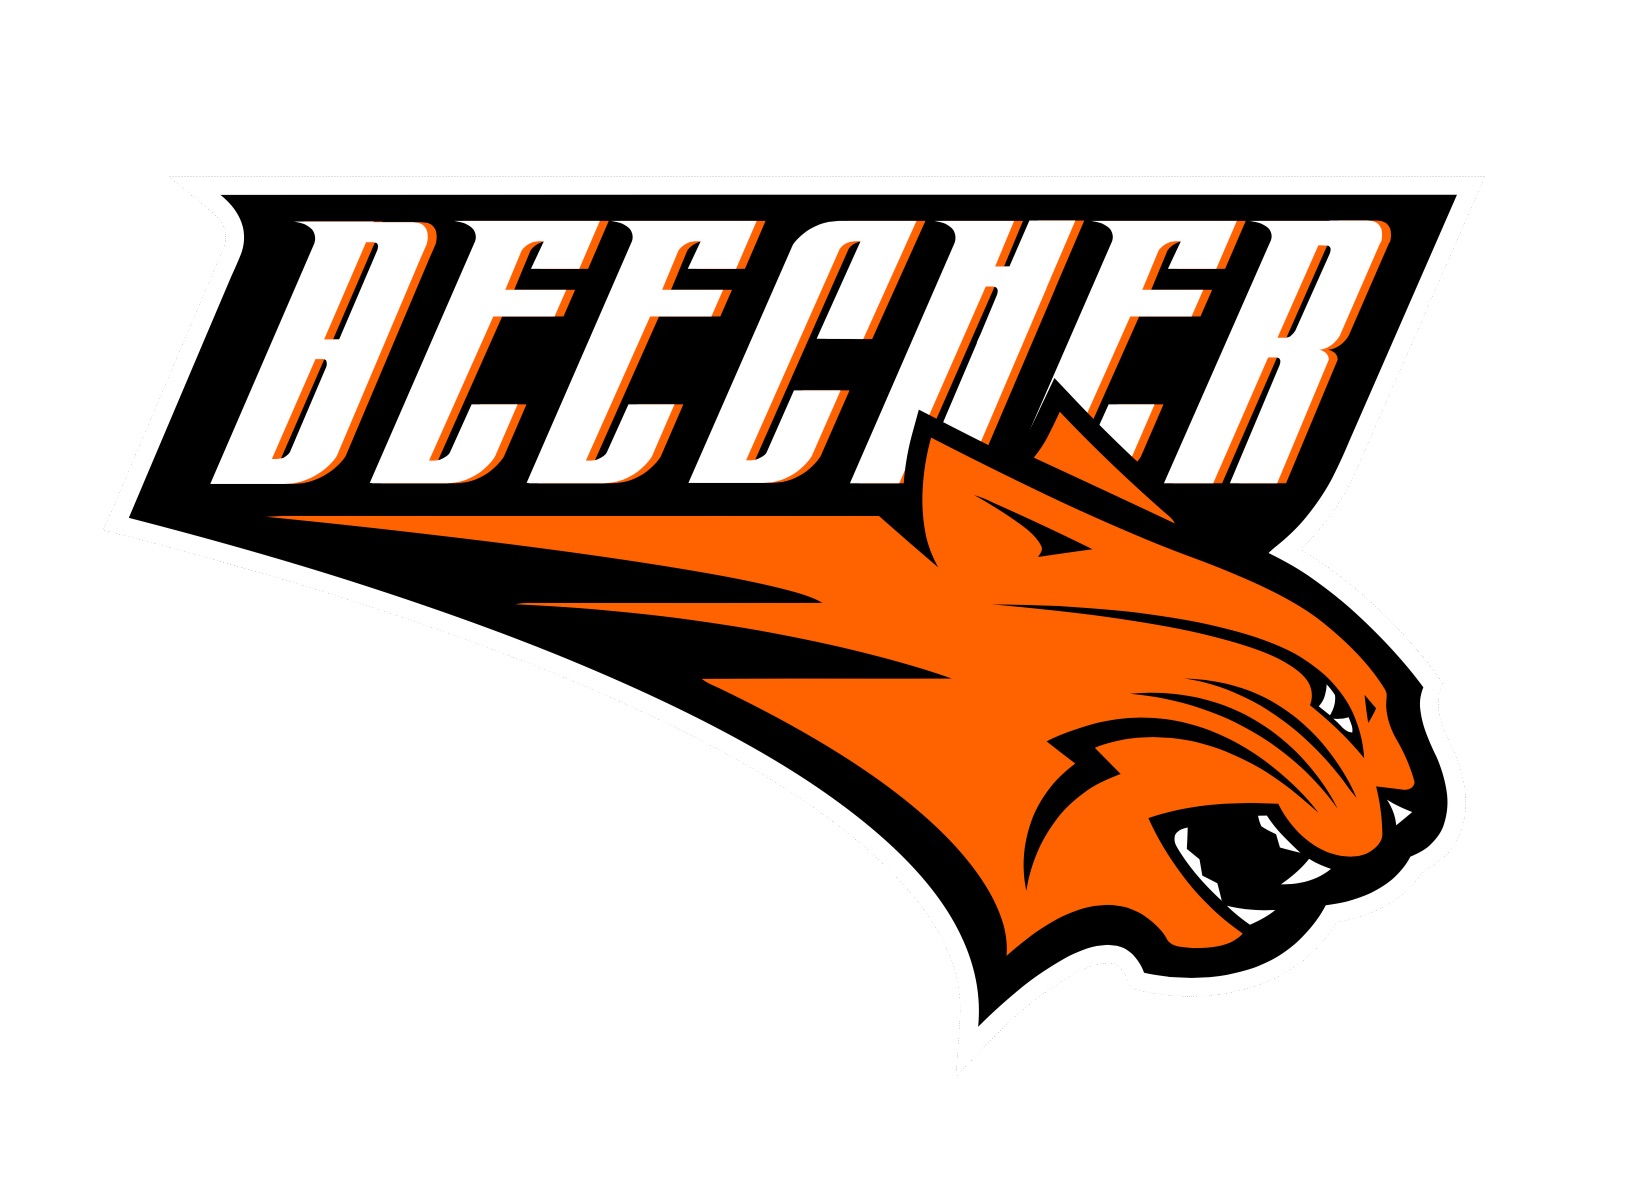 Beecher 200U Logo